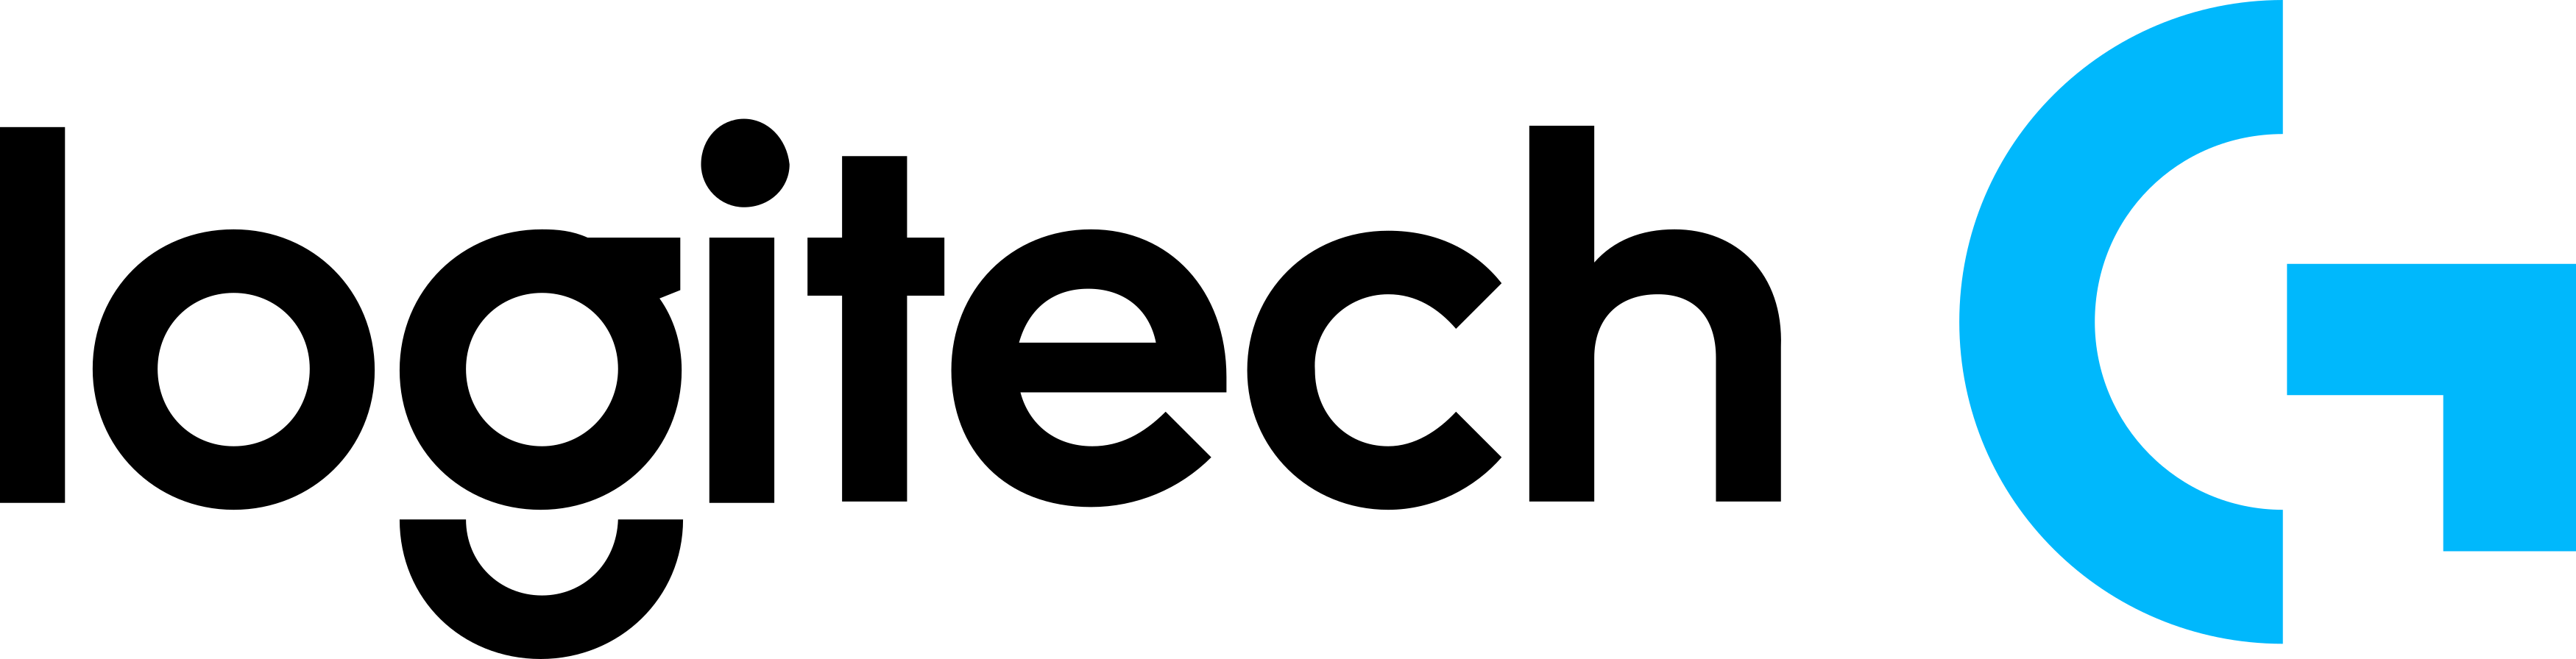 Logitech Logo PNG - 176187